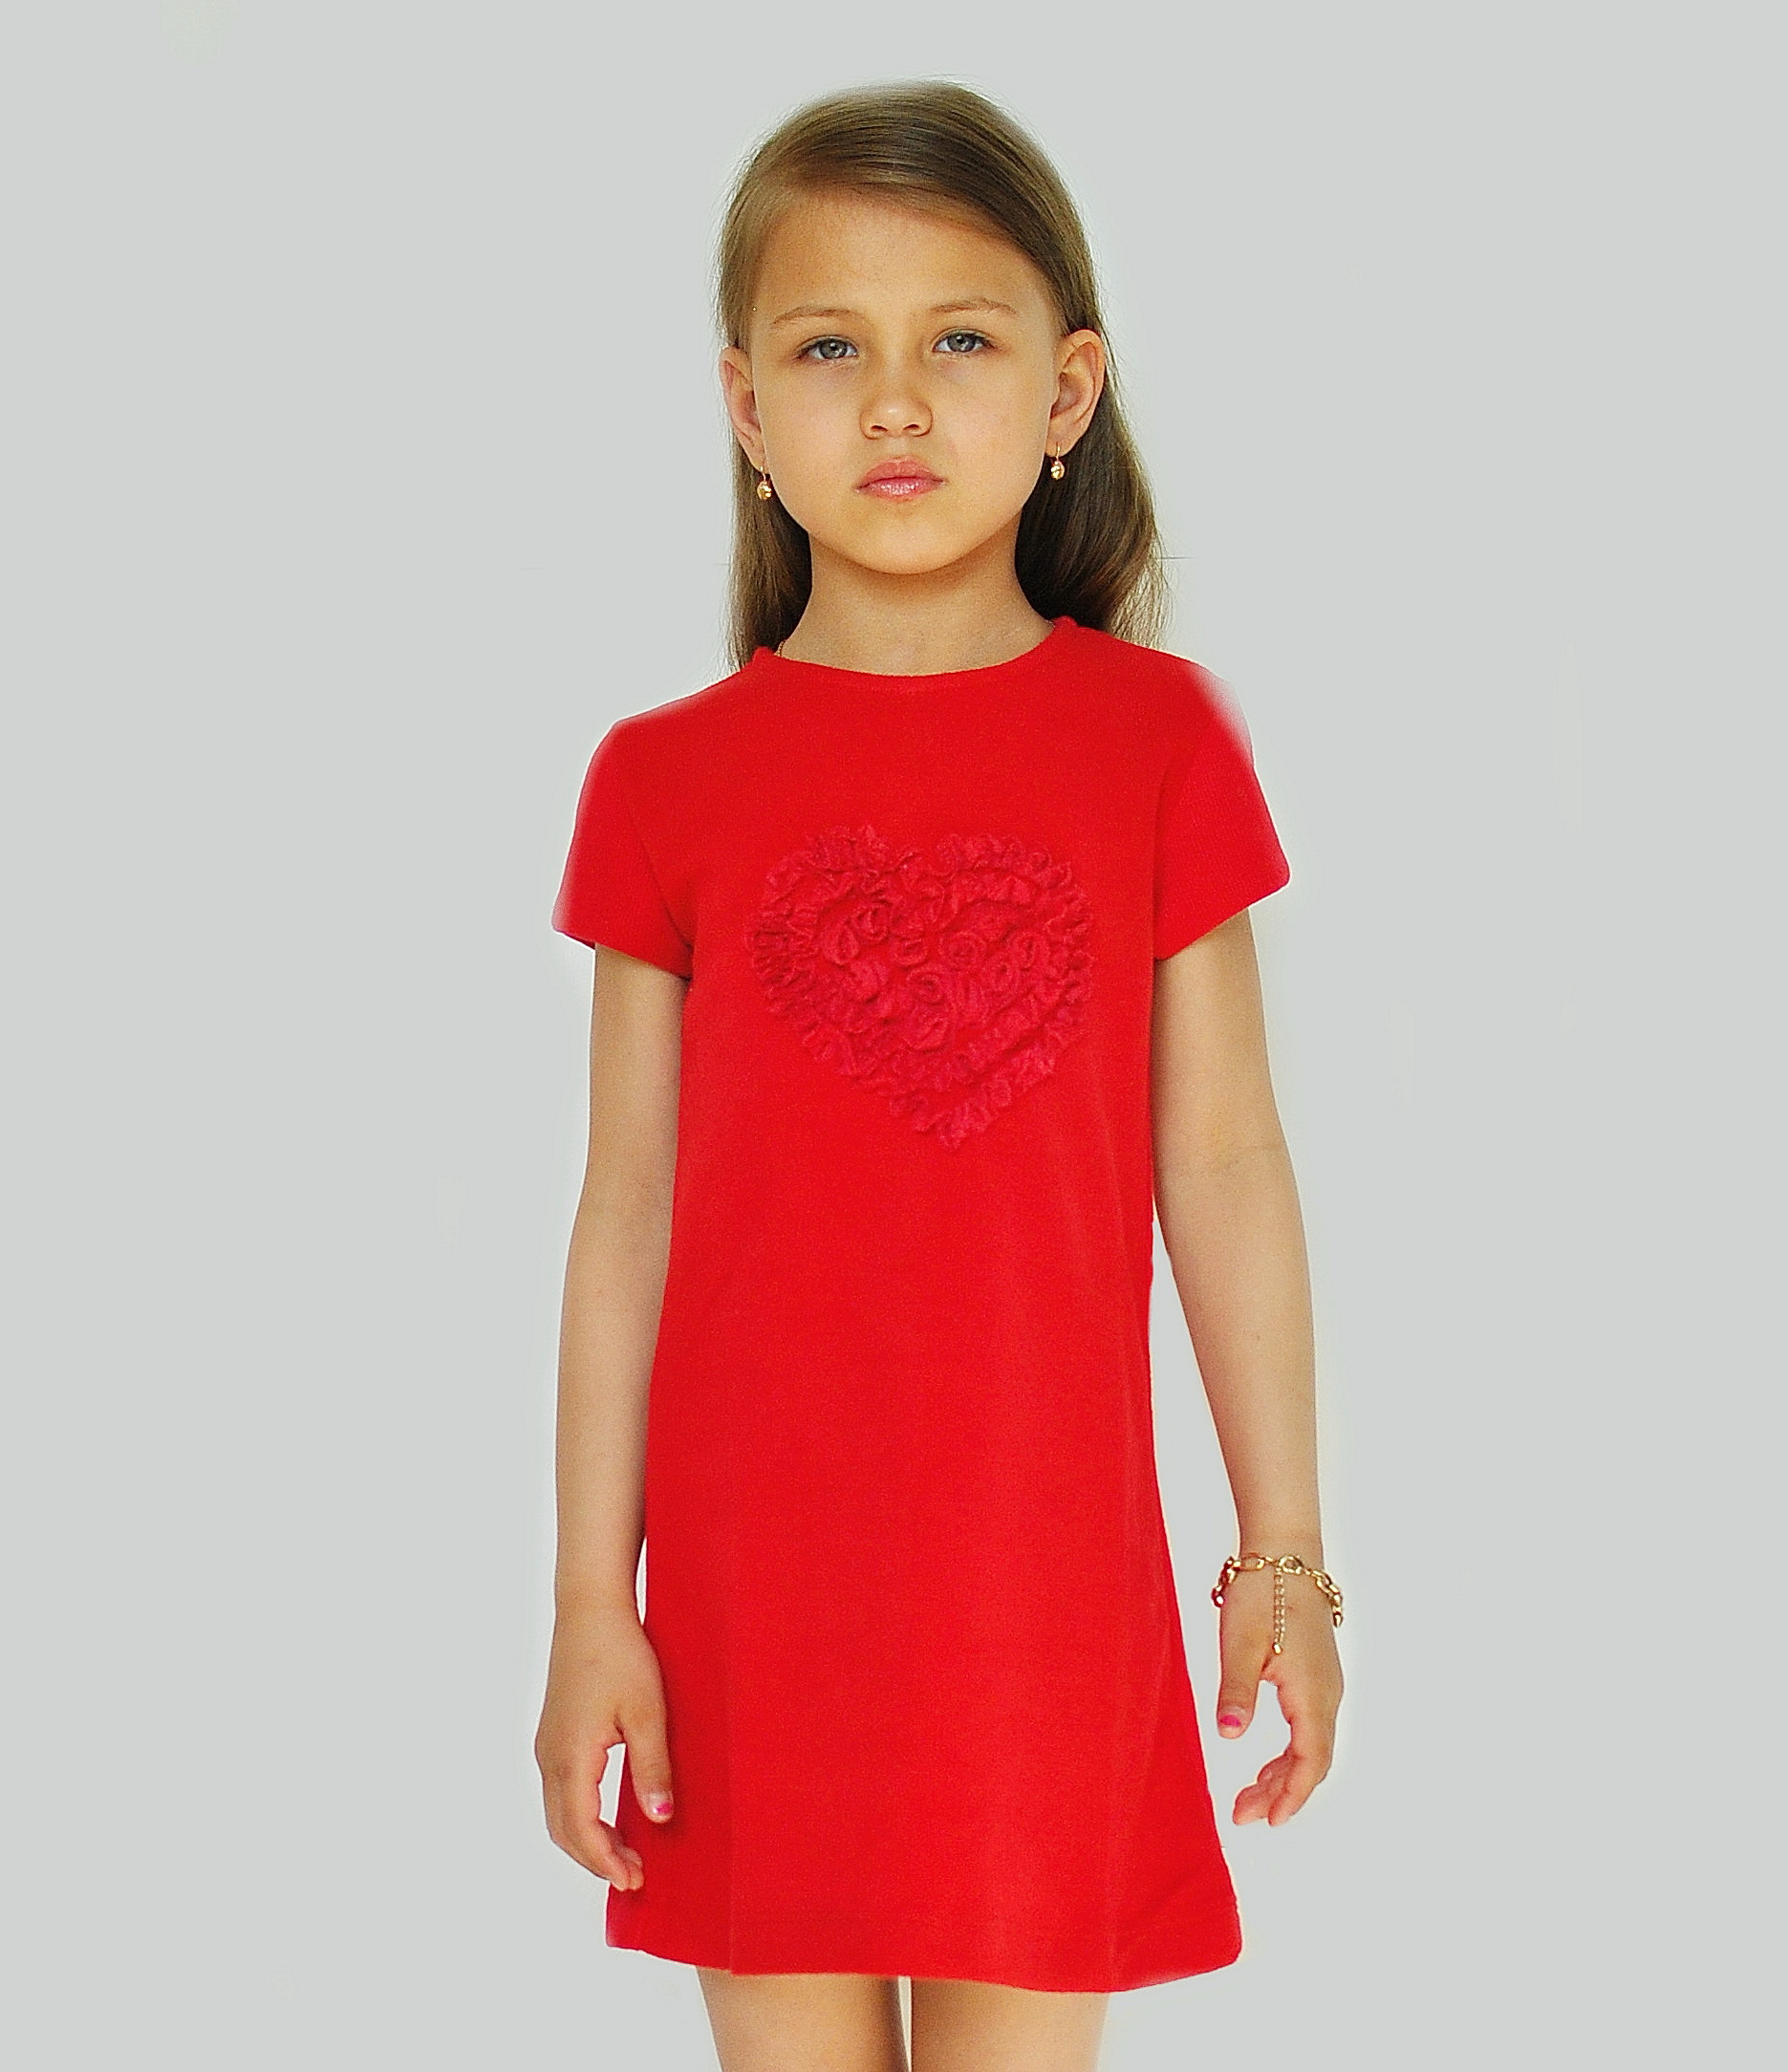 Фото 3. Красное платье Bambina (Go Kids)